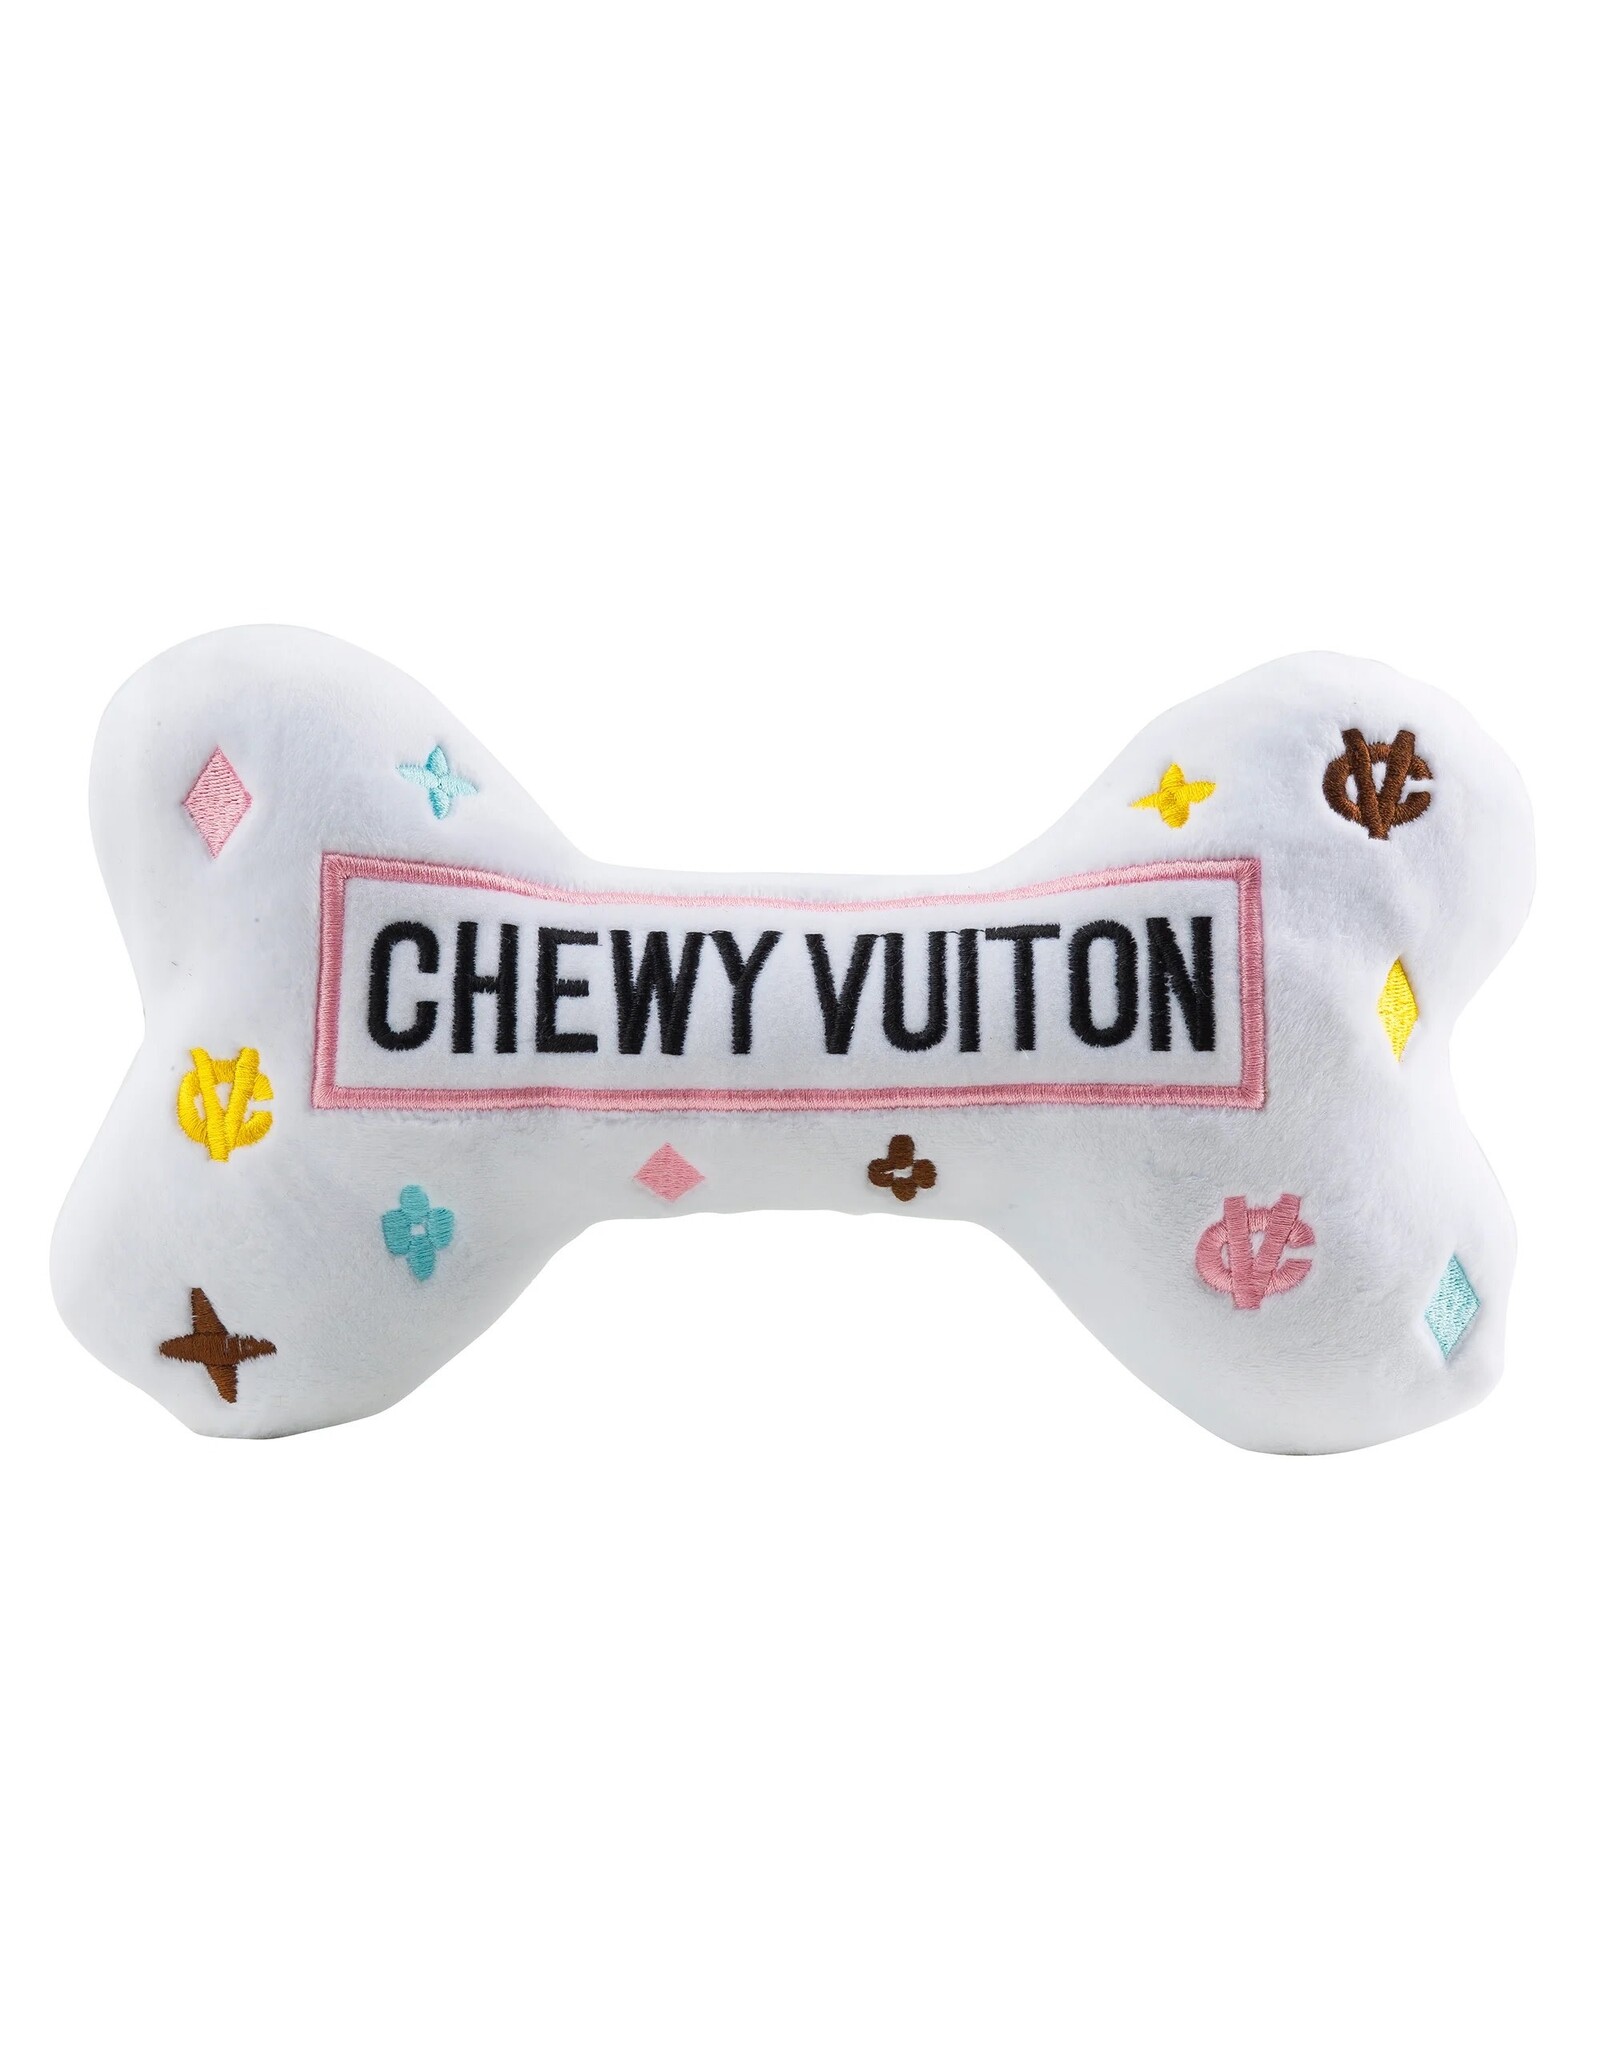 Haute Diggity Dog White Chewy Vuiton Bone Squeaker Dog Toy XL